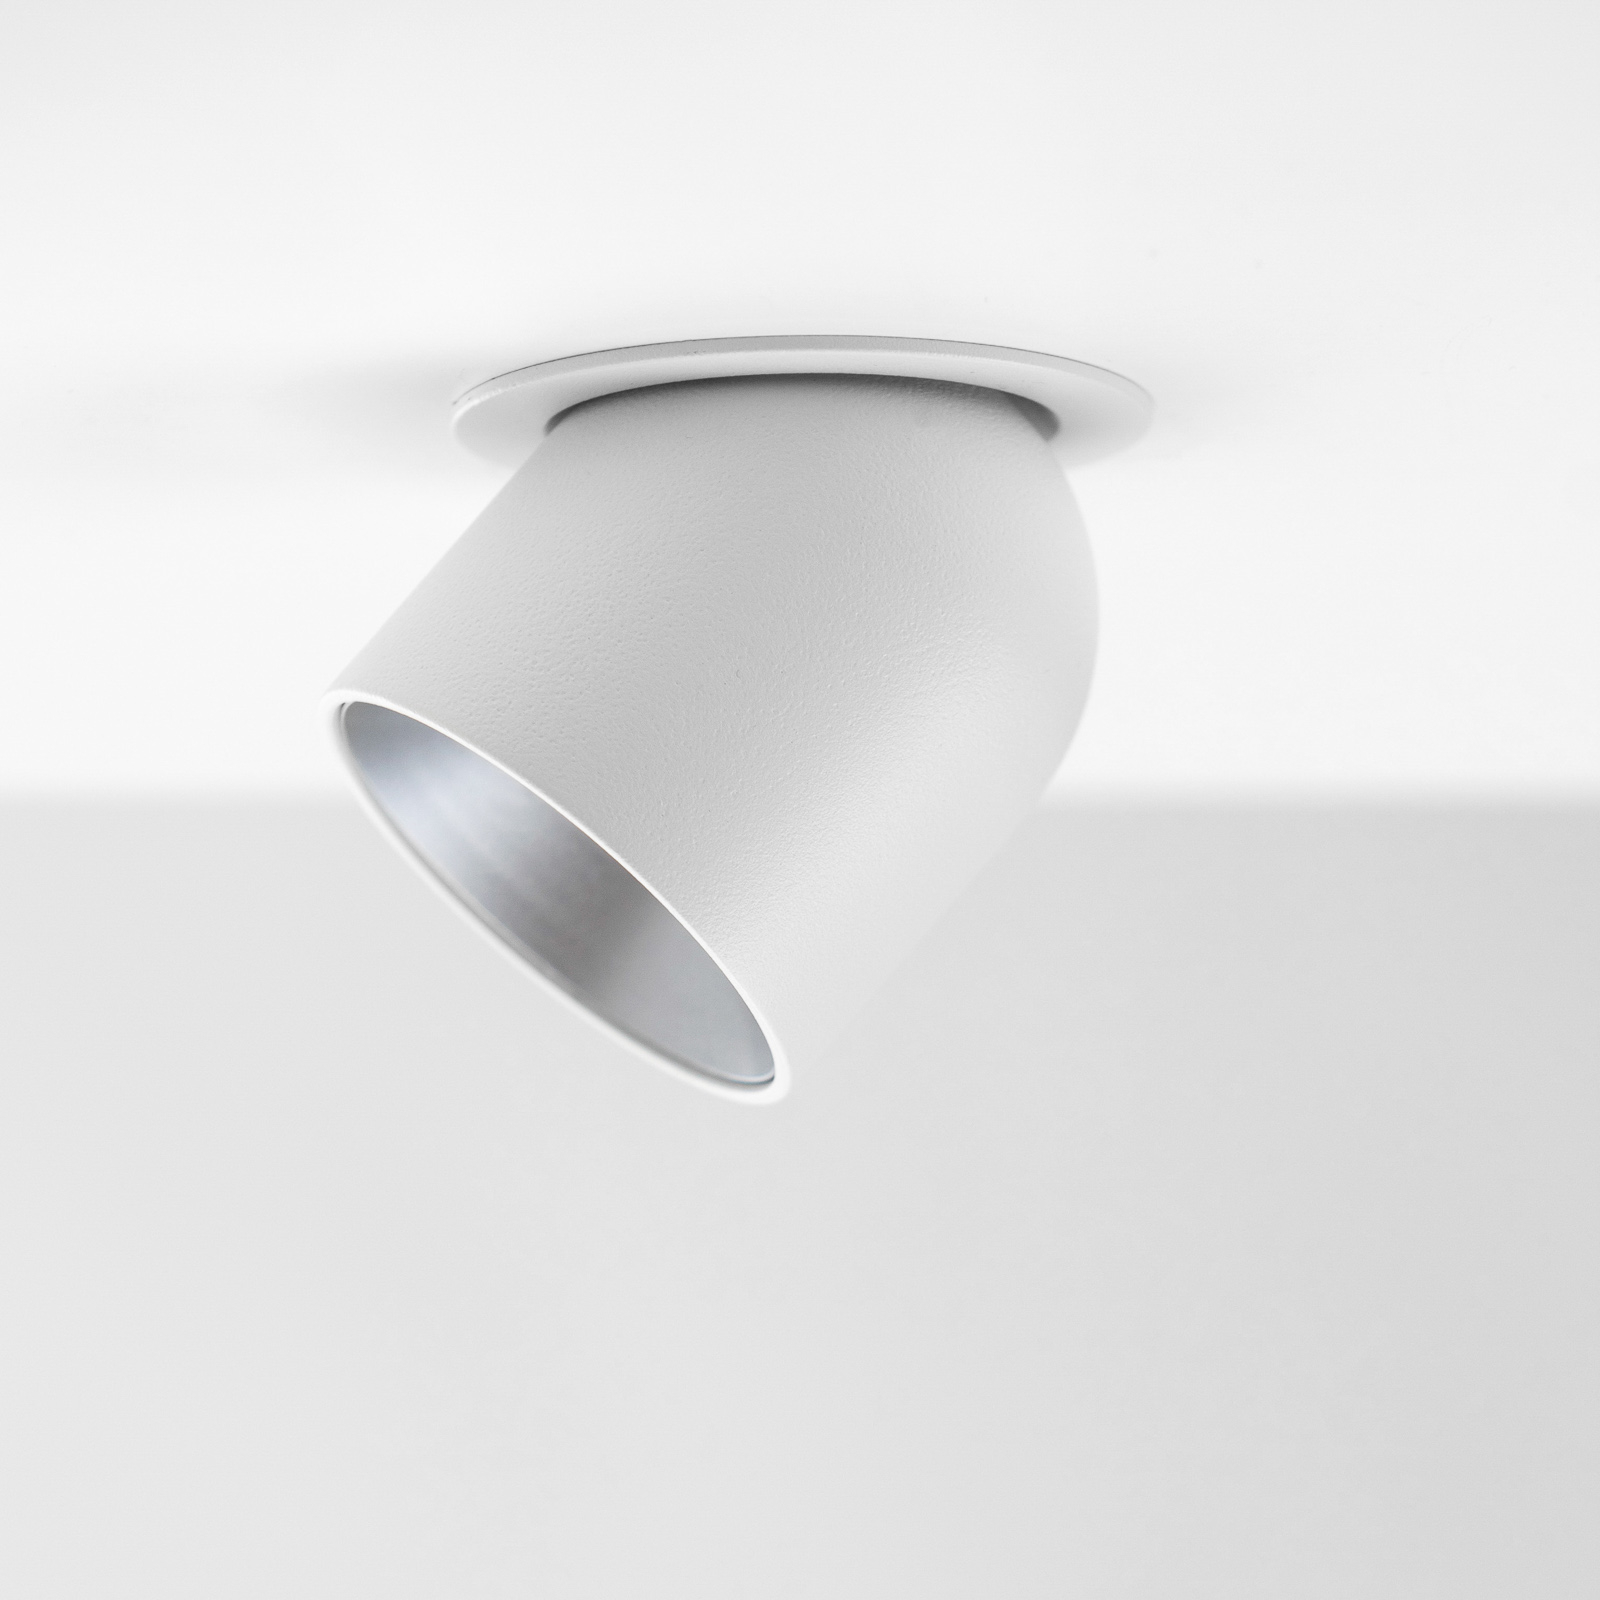 SLC Cup LED downlight biele/striebro 2 700 K